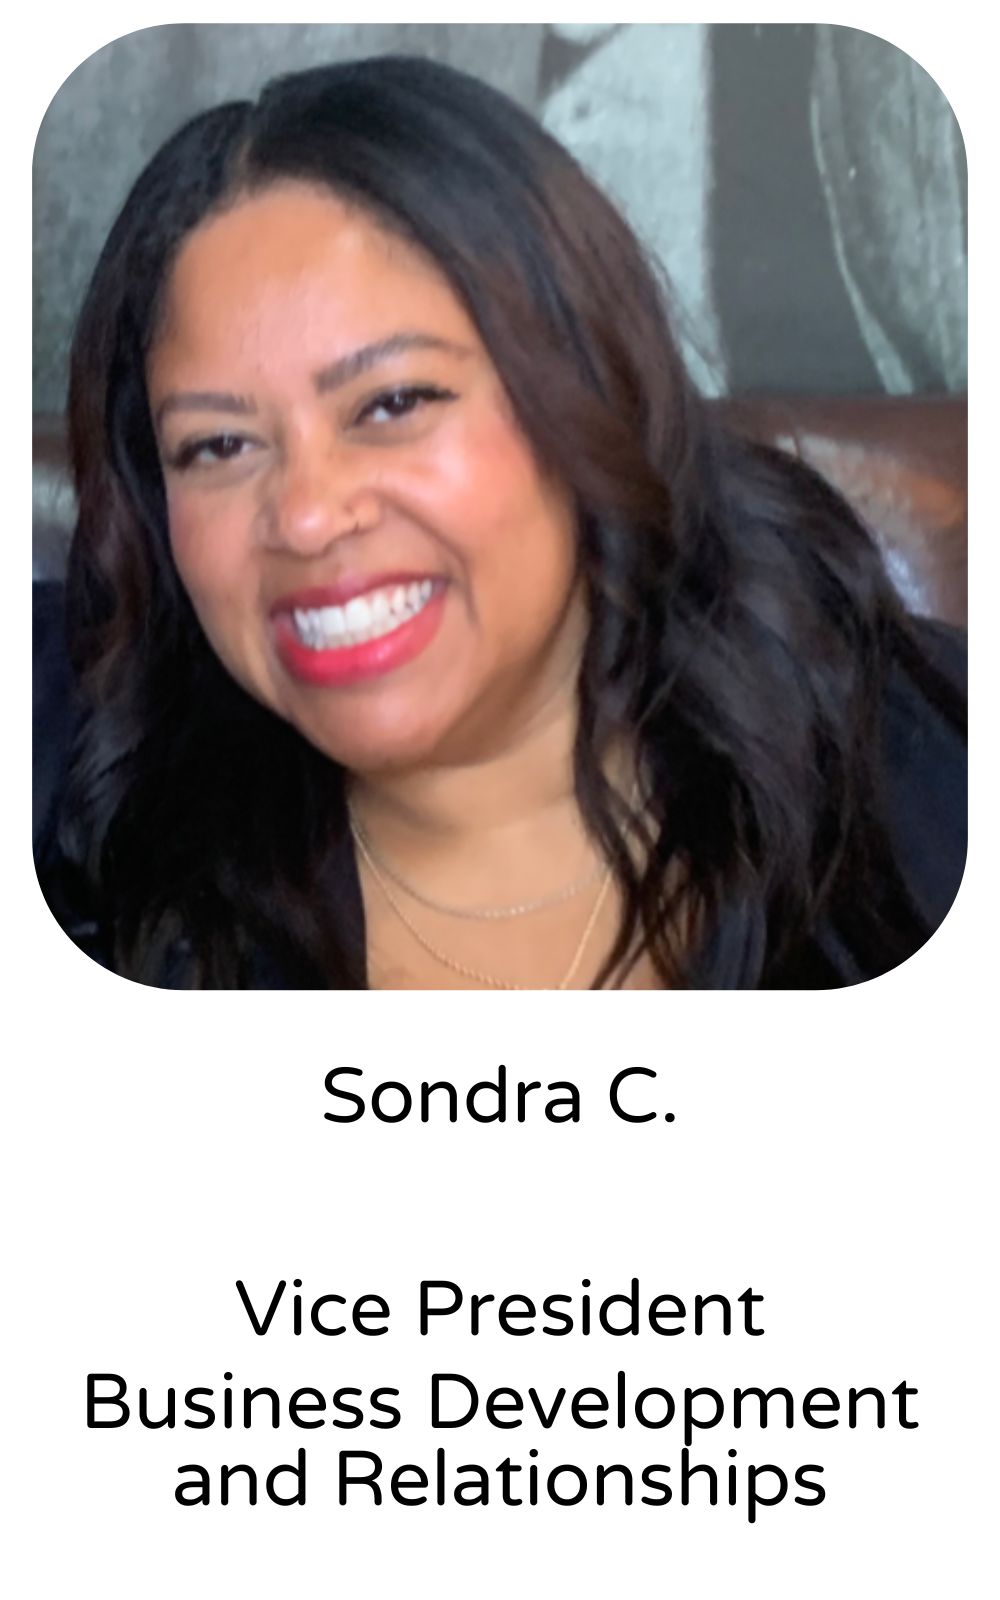 Sondra C., Vice President, Business Development and Relationships